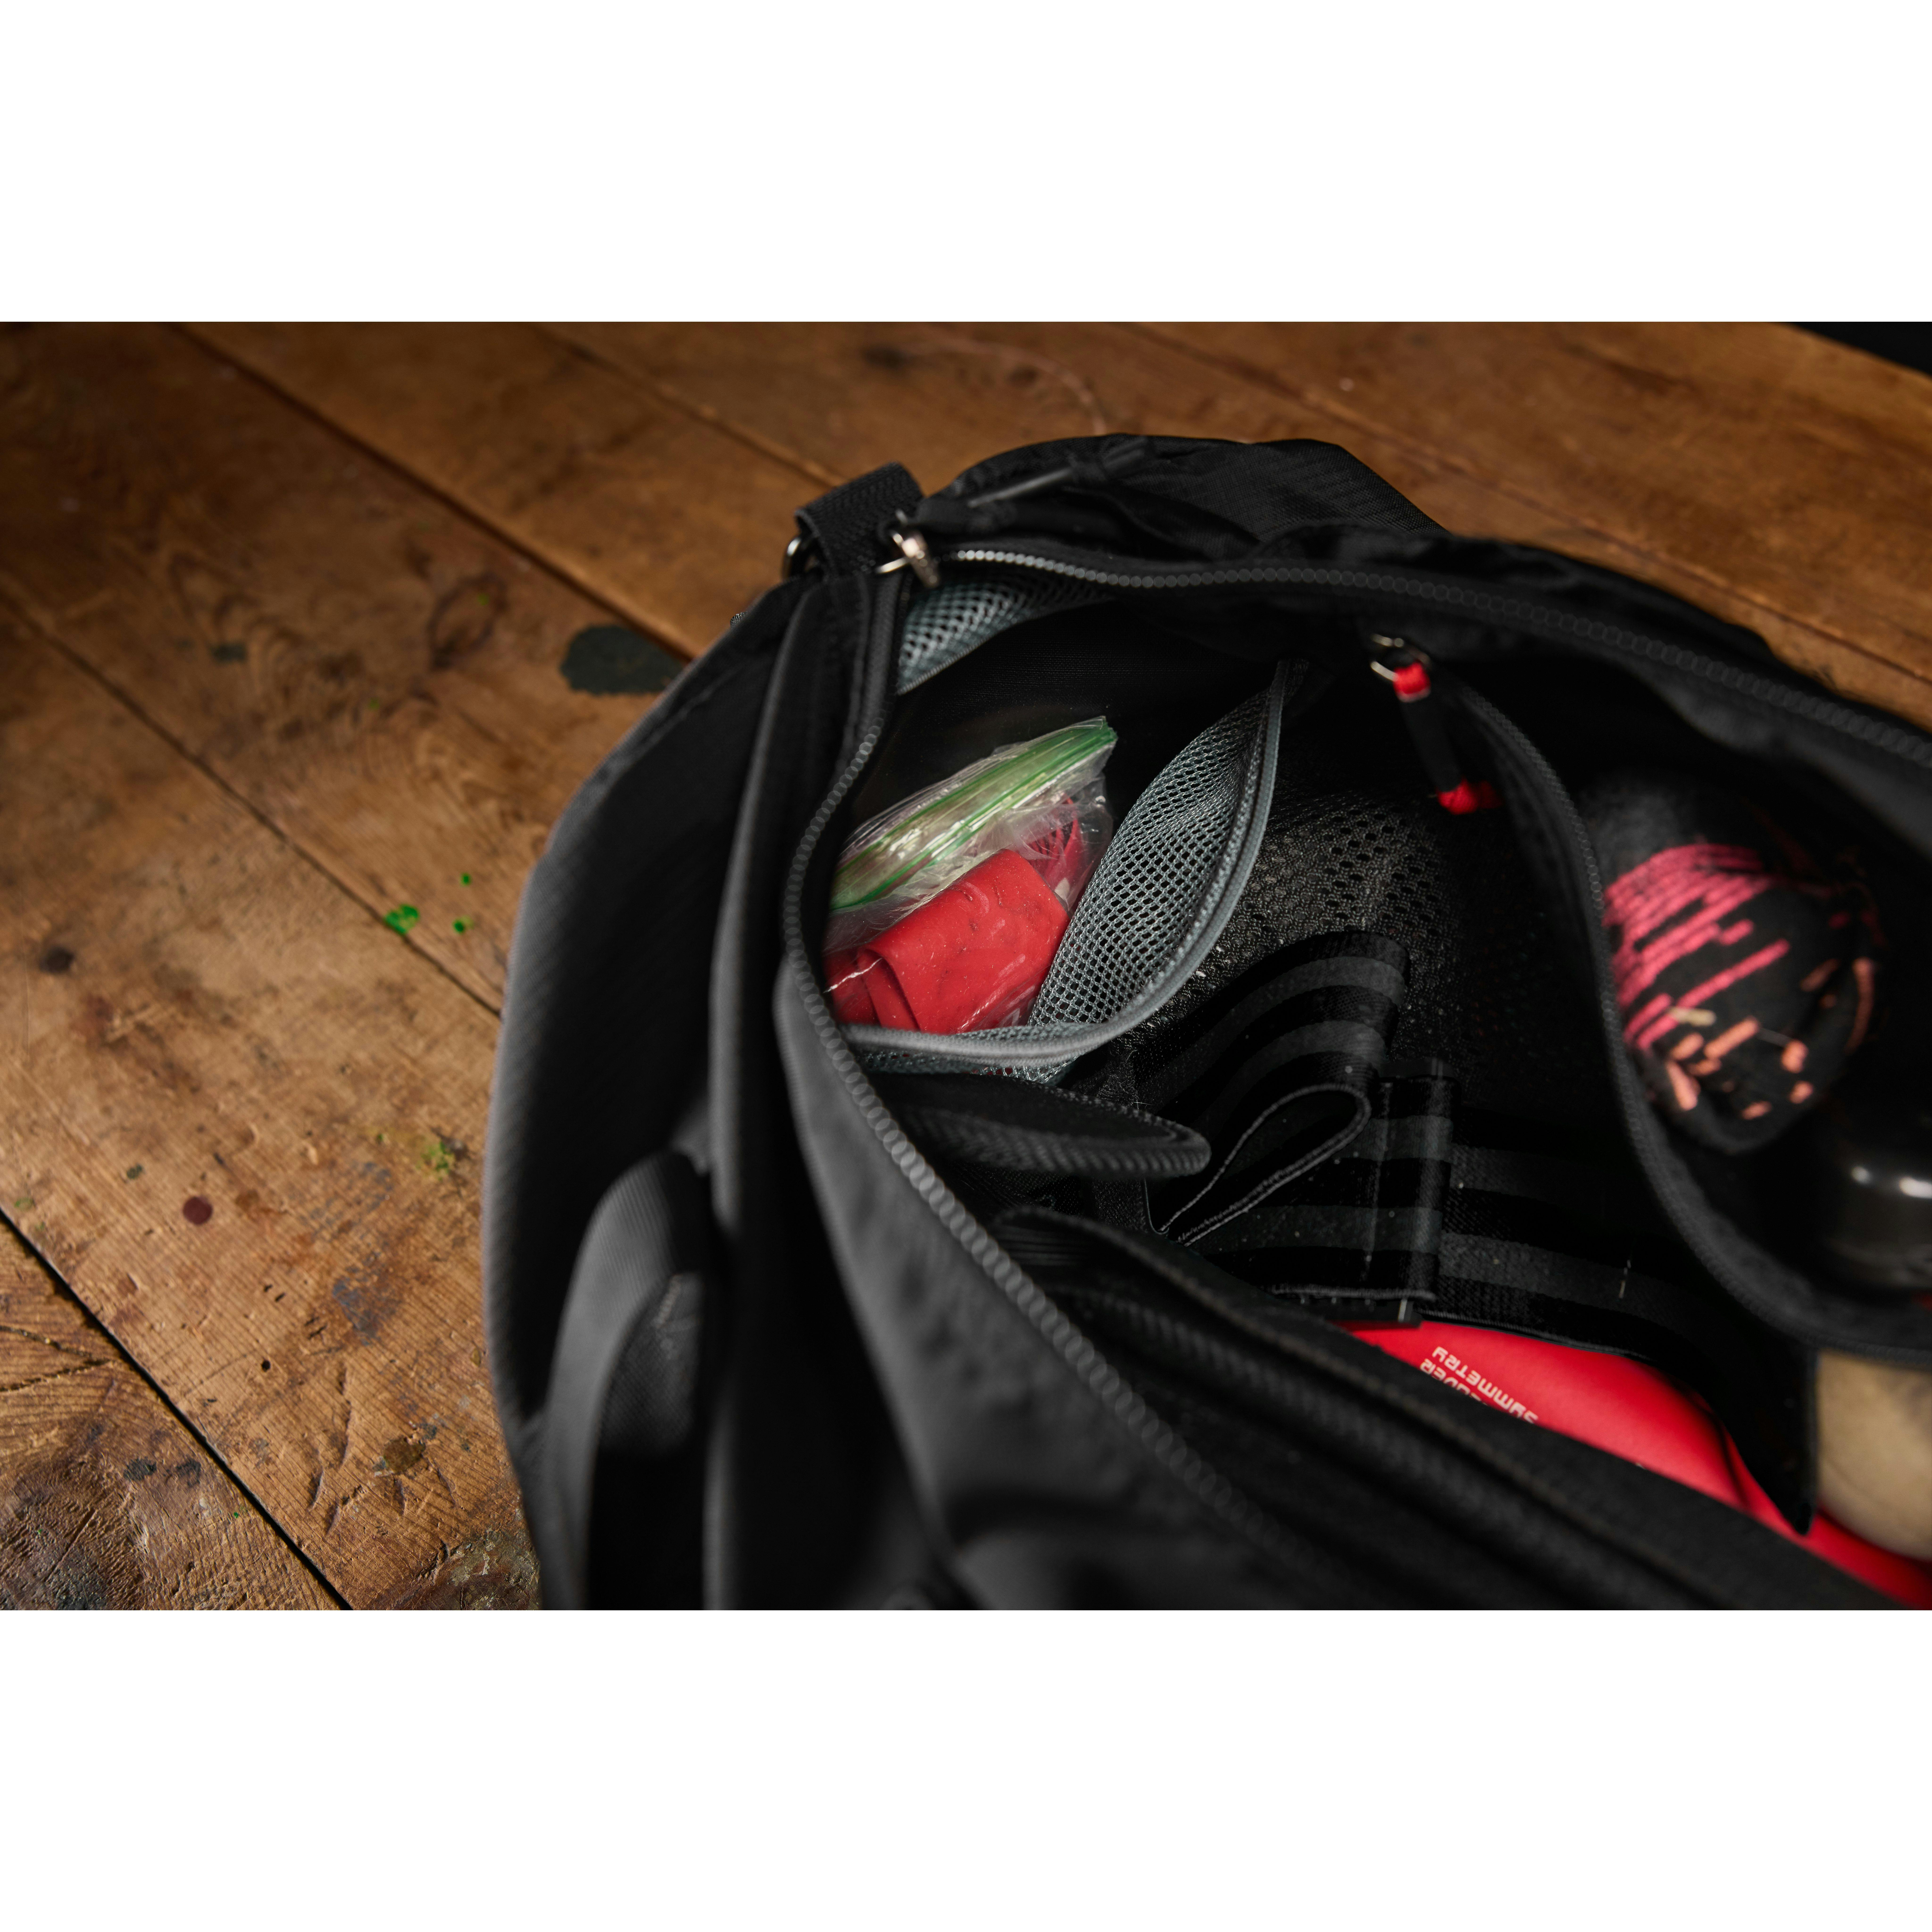 GORUCK Waxed Woodland Camo Kit Bag - 32L - Waxed Woodland Camo, Duffle Bags